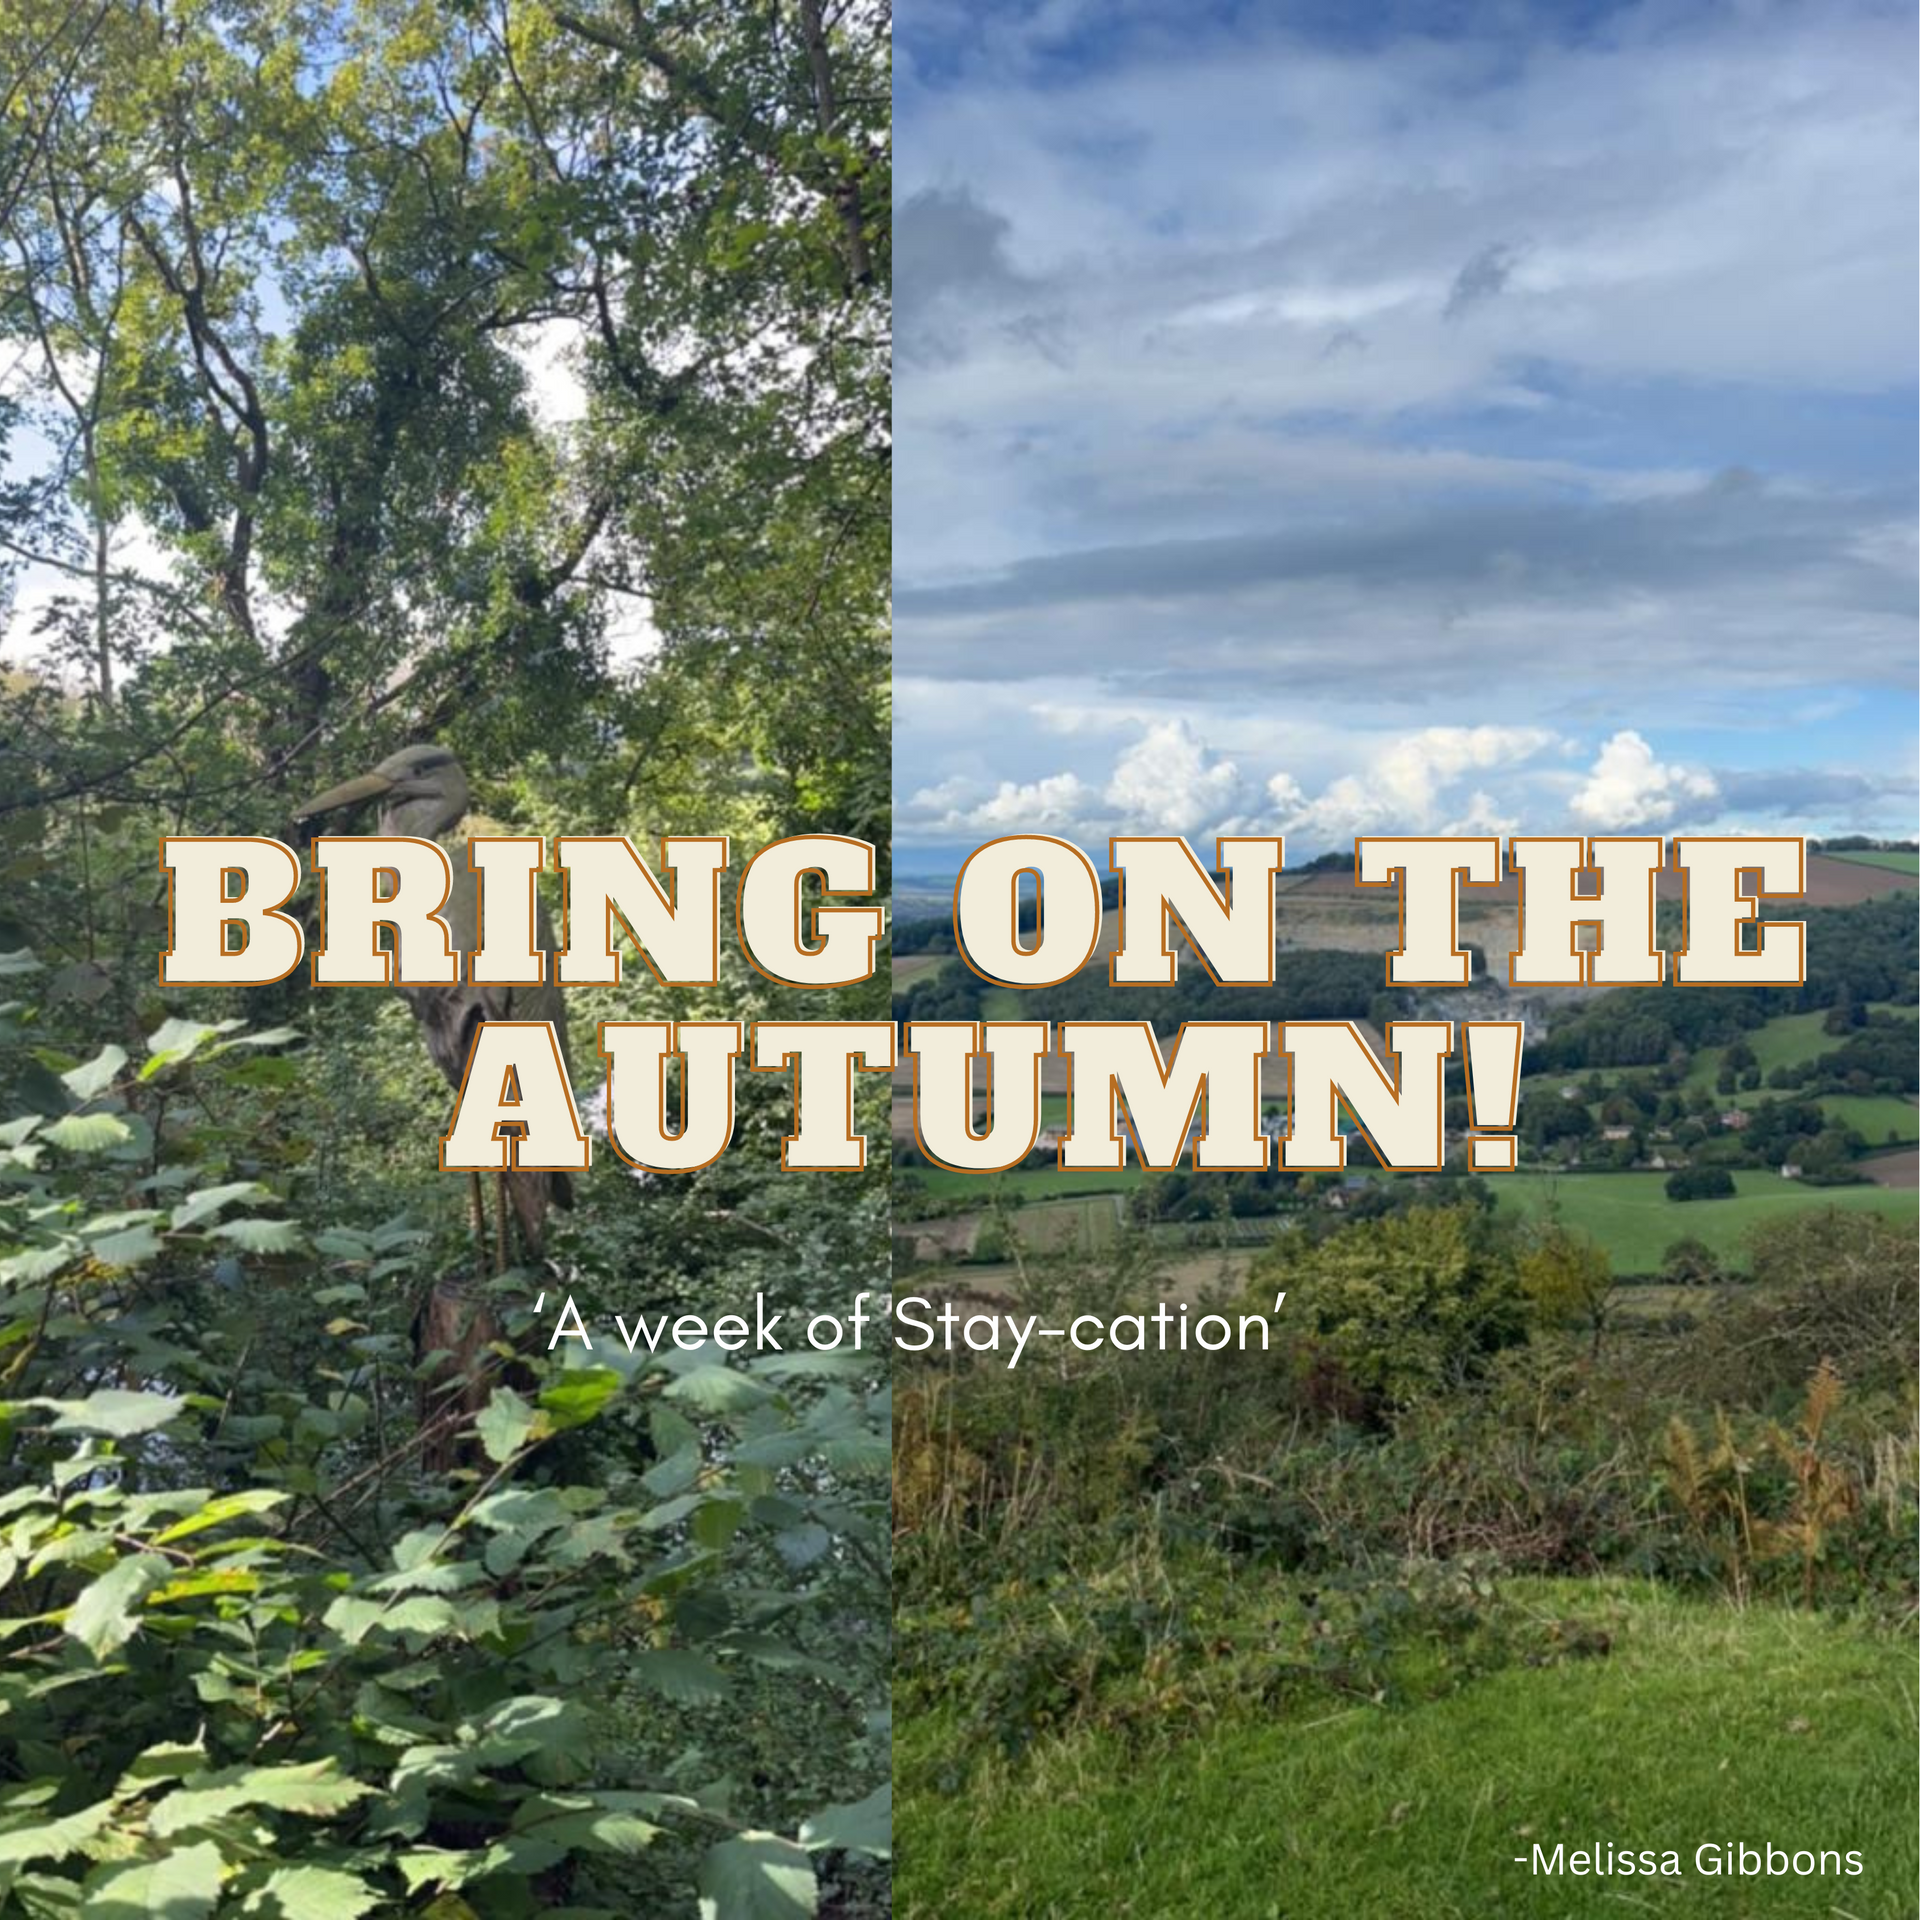 Bring on the Autumn!